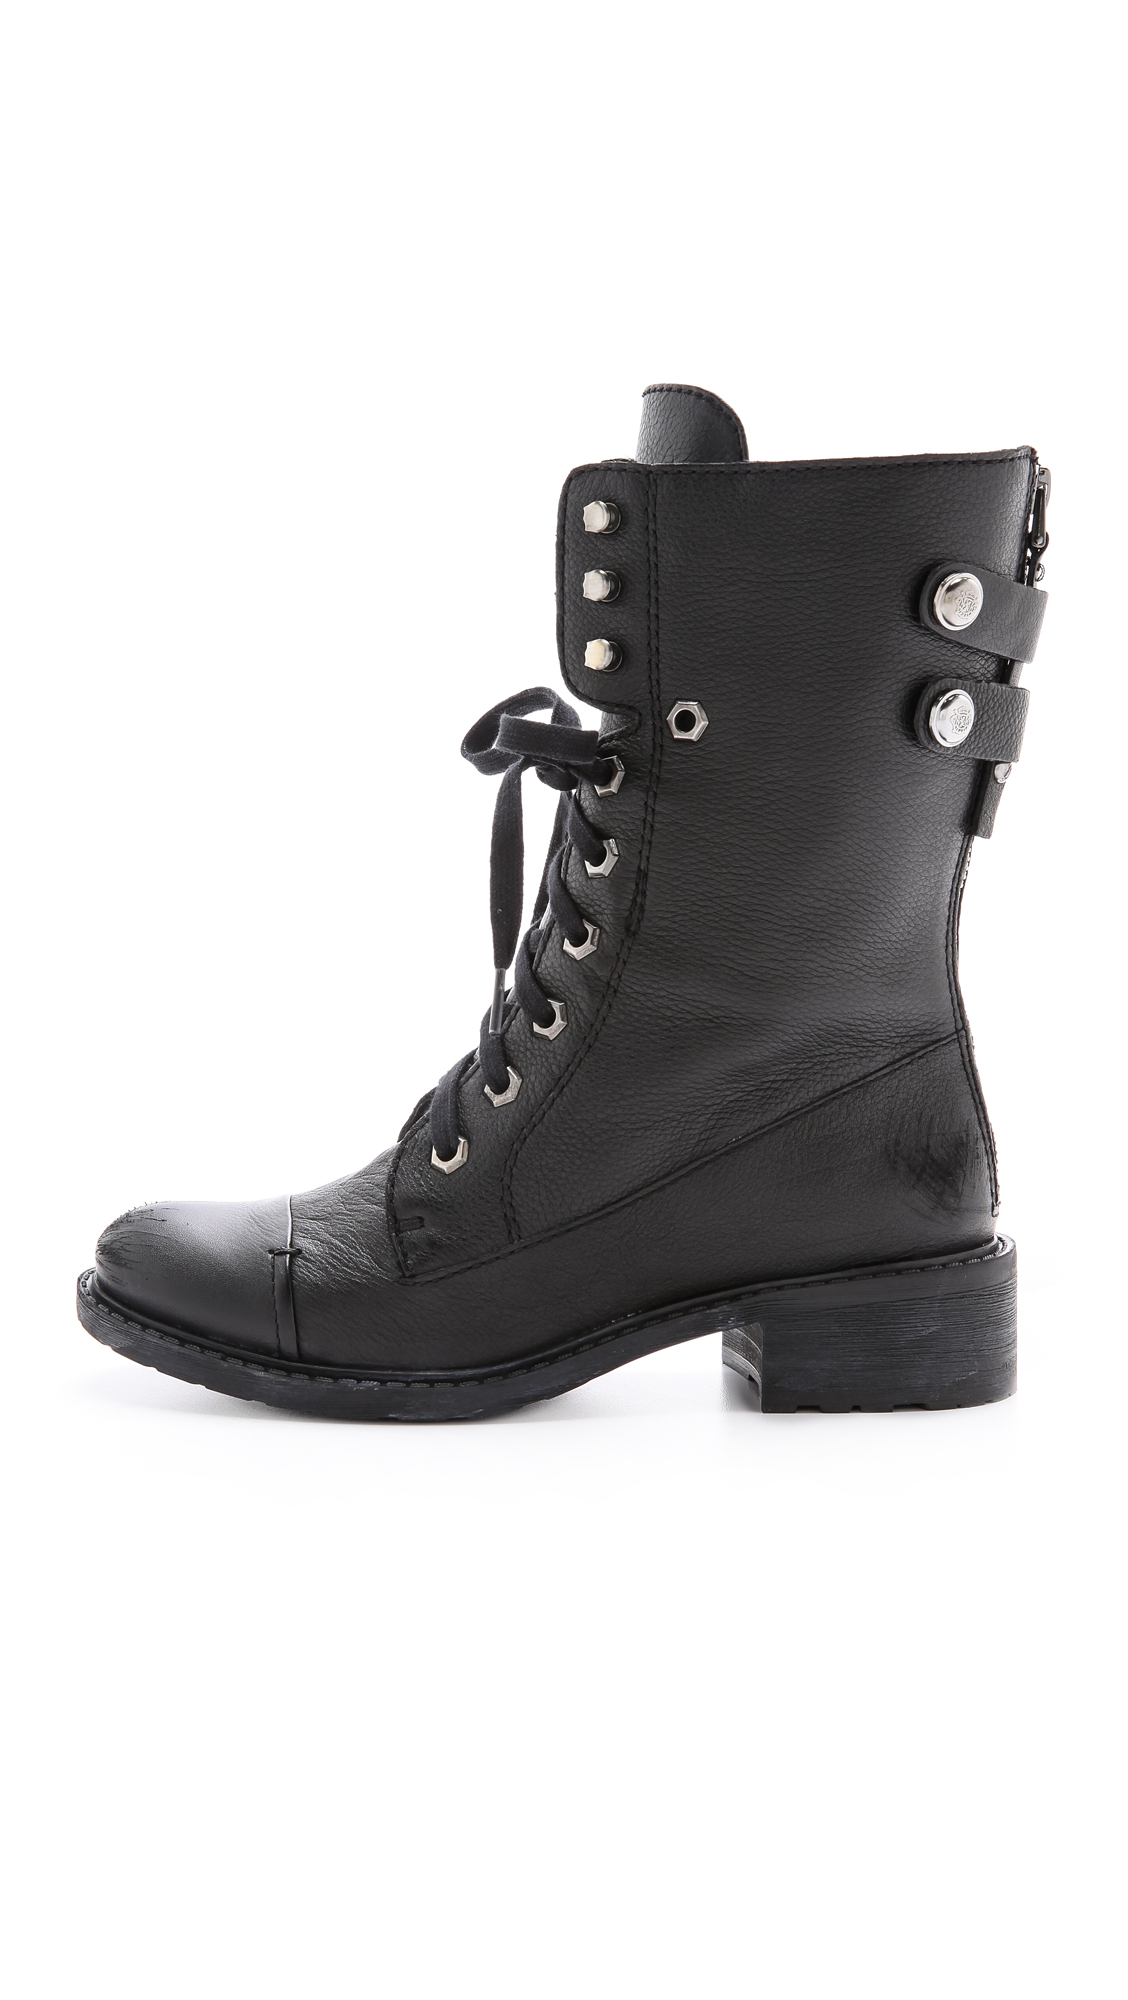 Lyst - Sam Edelman Darwin Combat Boots - Black in Black